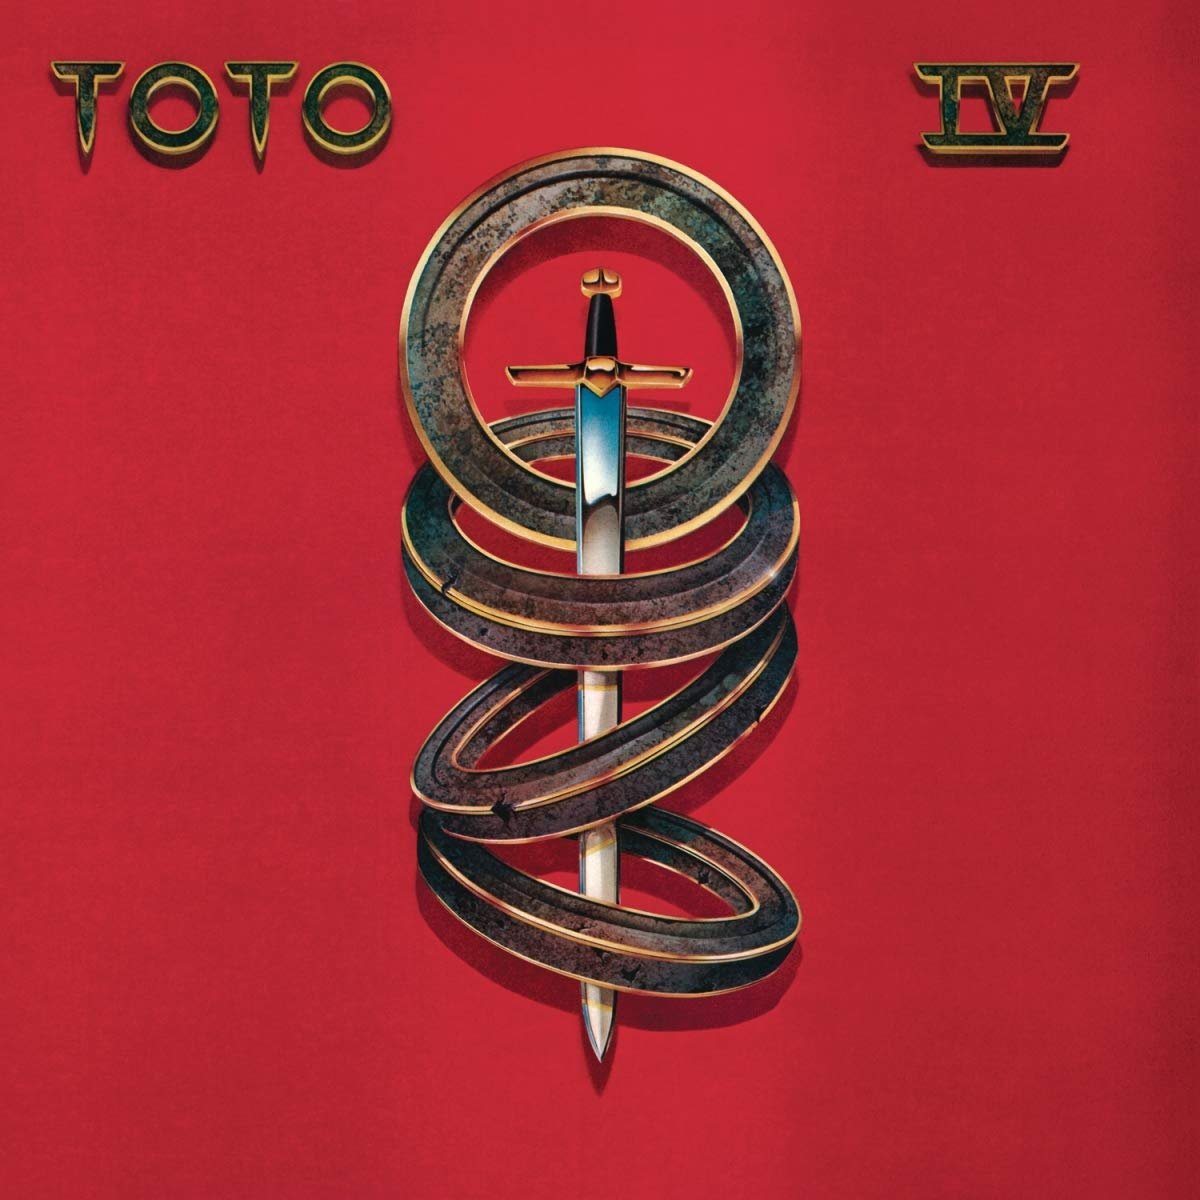 Toto "IV" LP (Bloodshot Vinyl)